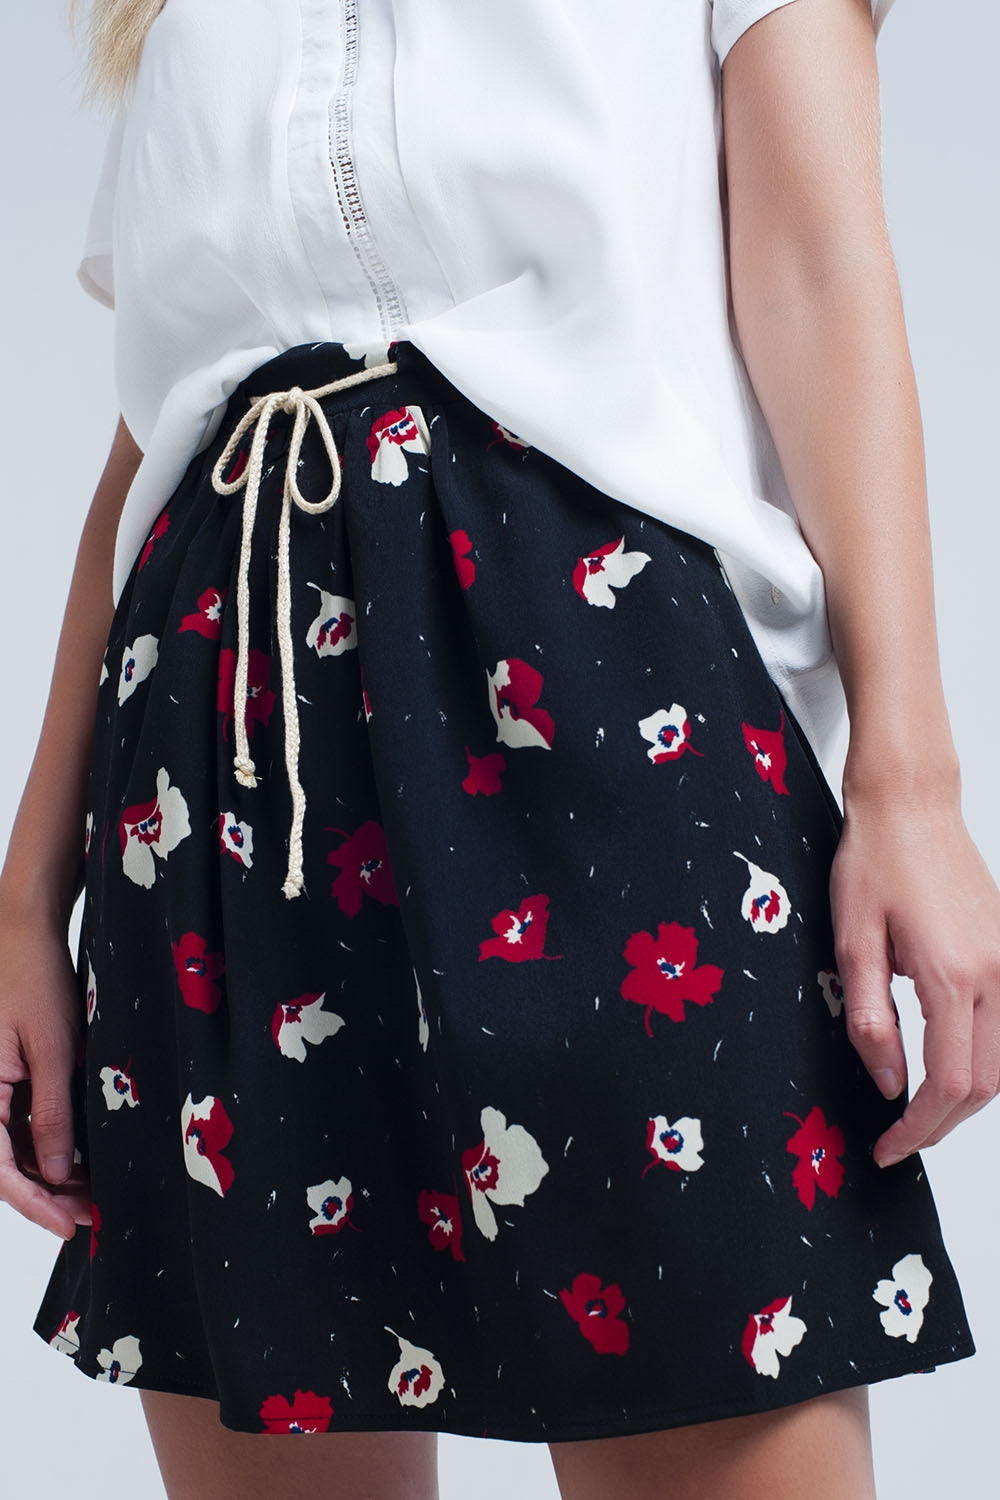 Q2 Black mini skirt with floral pattern